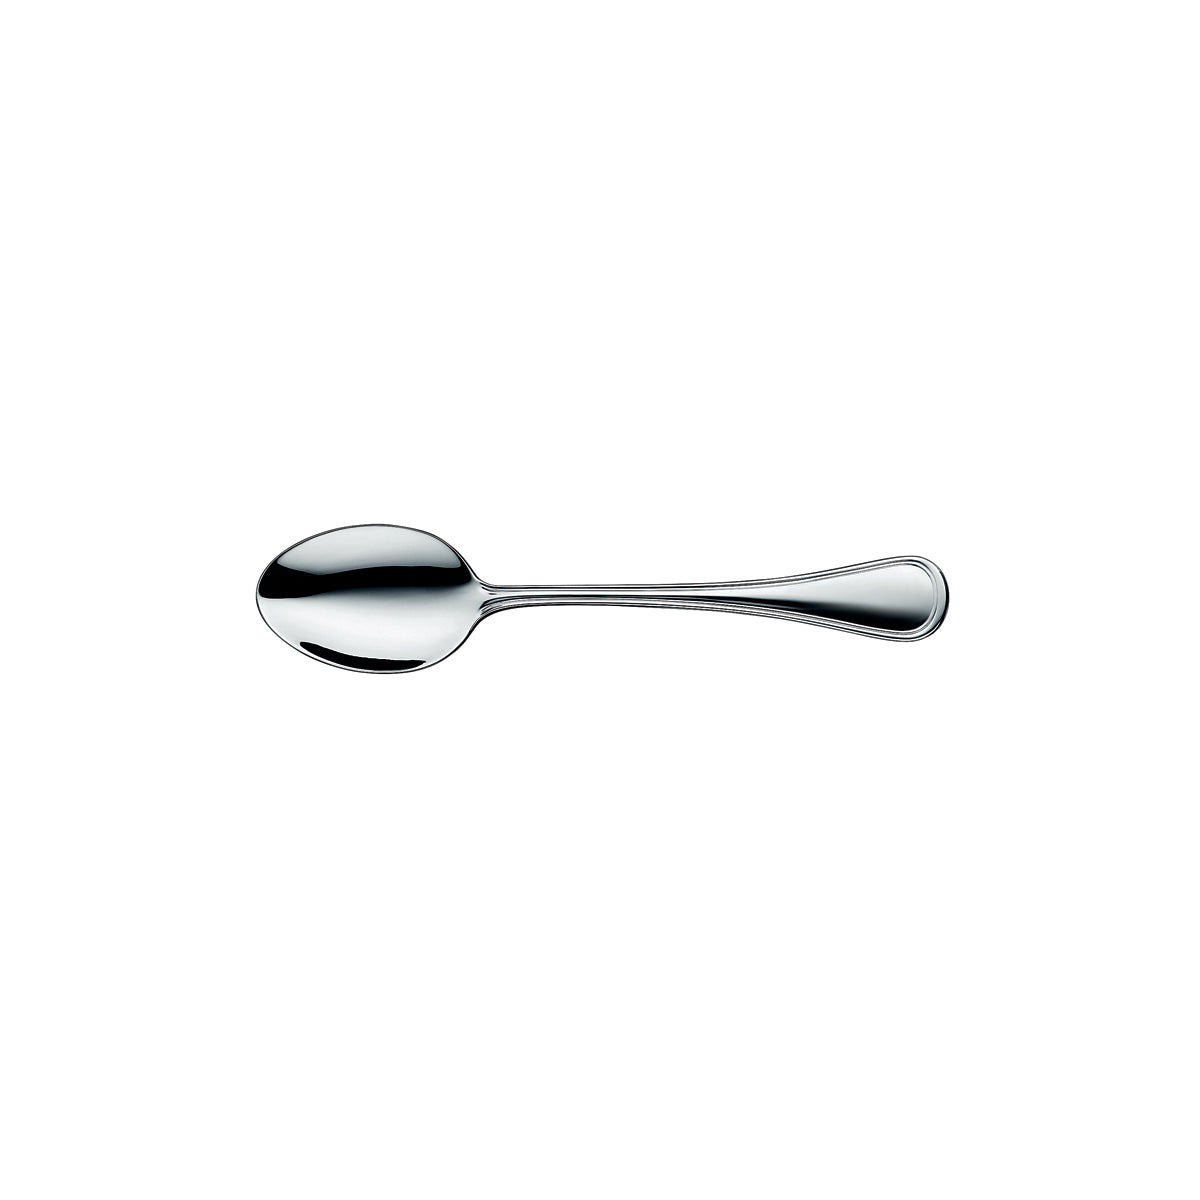 12.0201.6040 WMF Contour Table Spoon Stainless Steel Tomkin Australia Hospitality Supplies